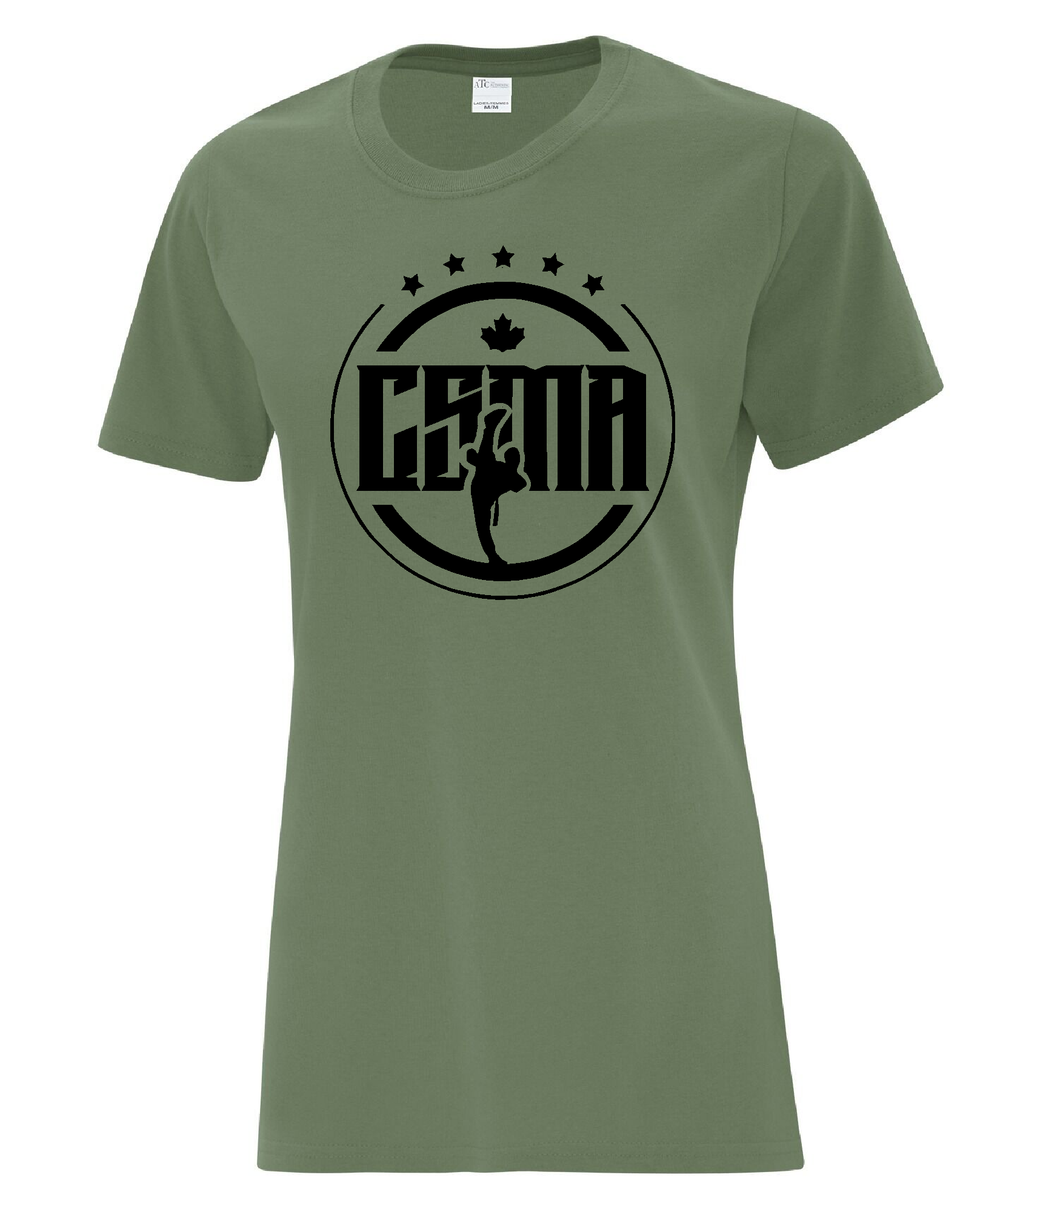 Women's Army Green T-Shirt - CSMA logo   *LIMITED EDITION*